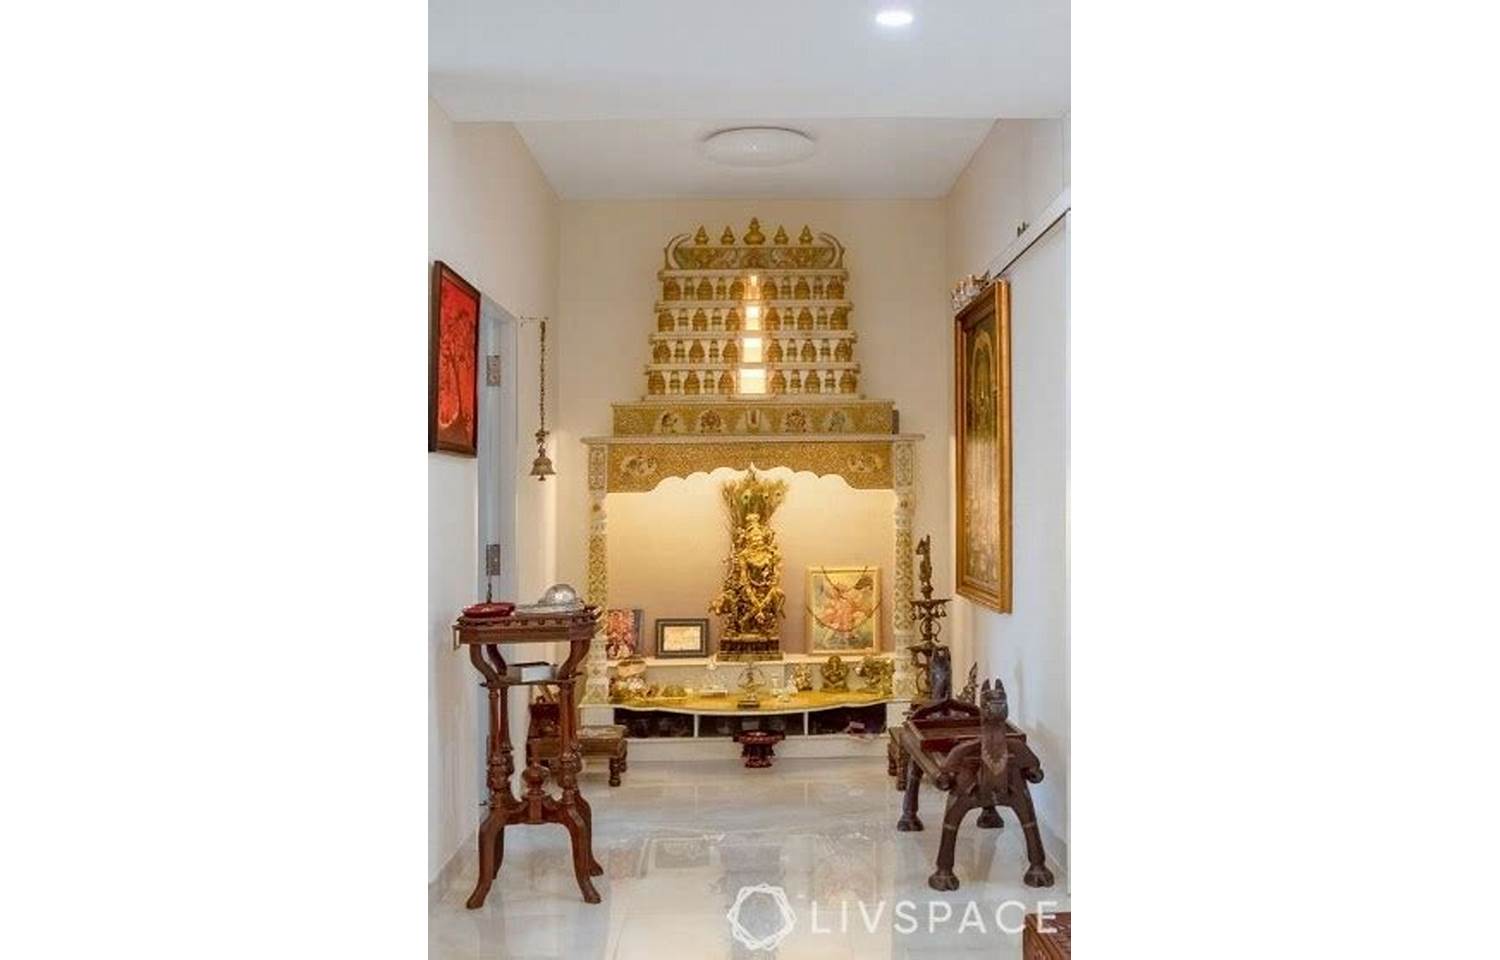 Hindu Prayer Room Lighting